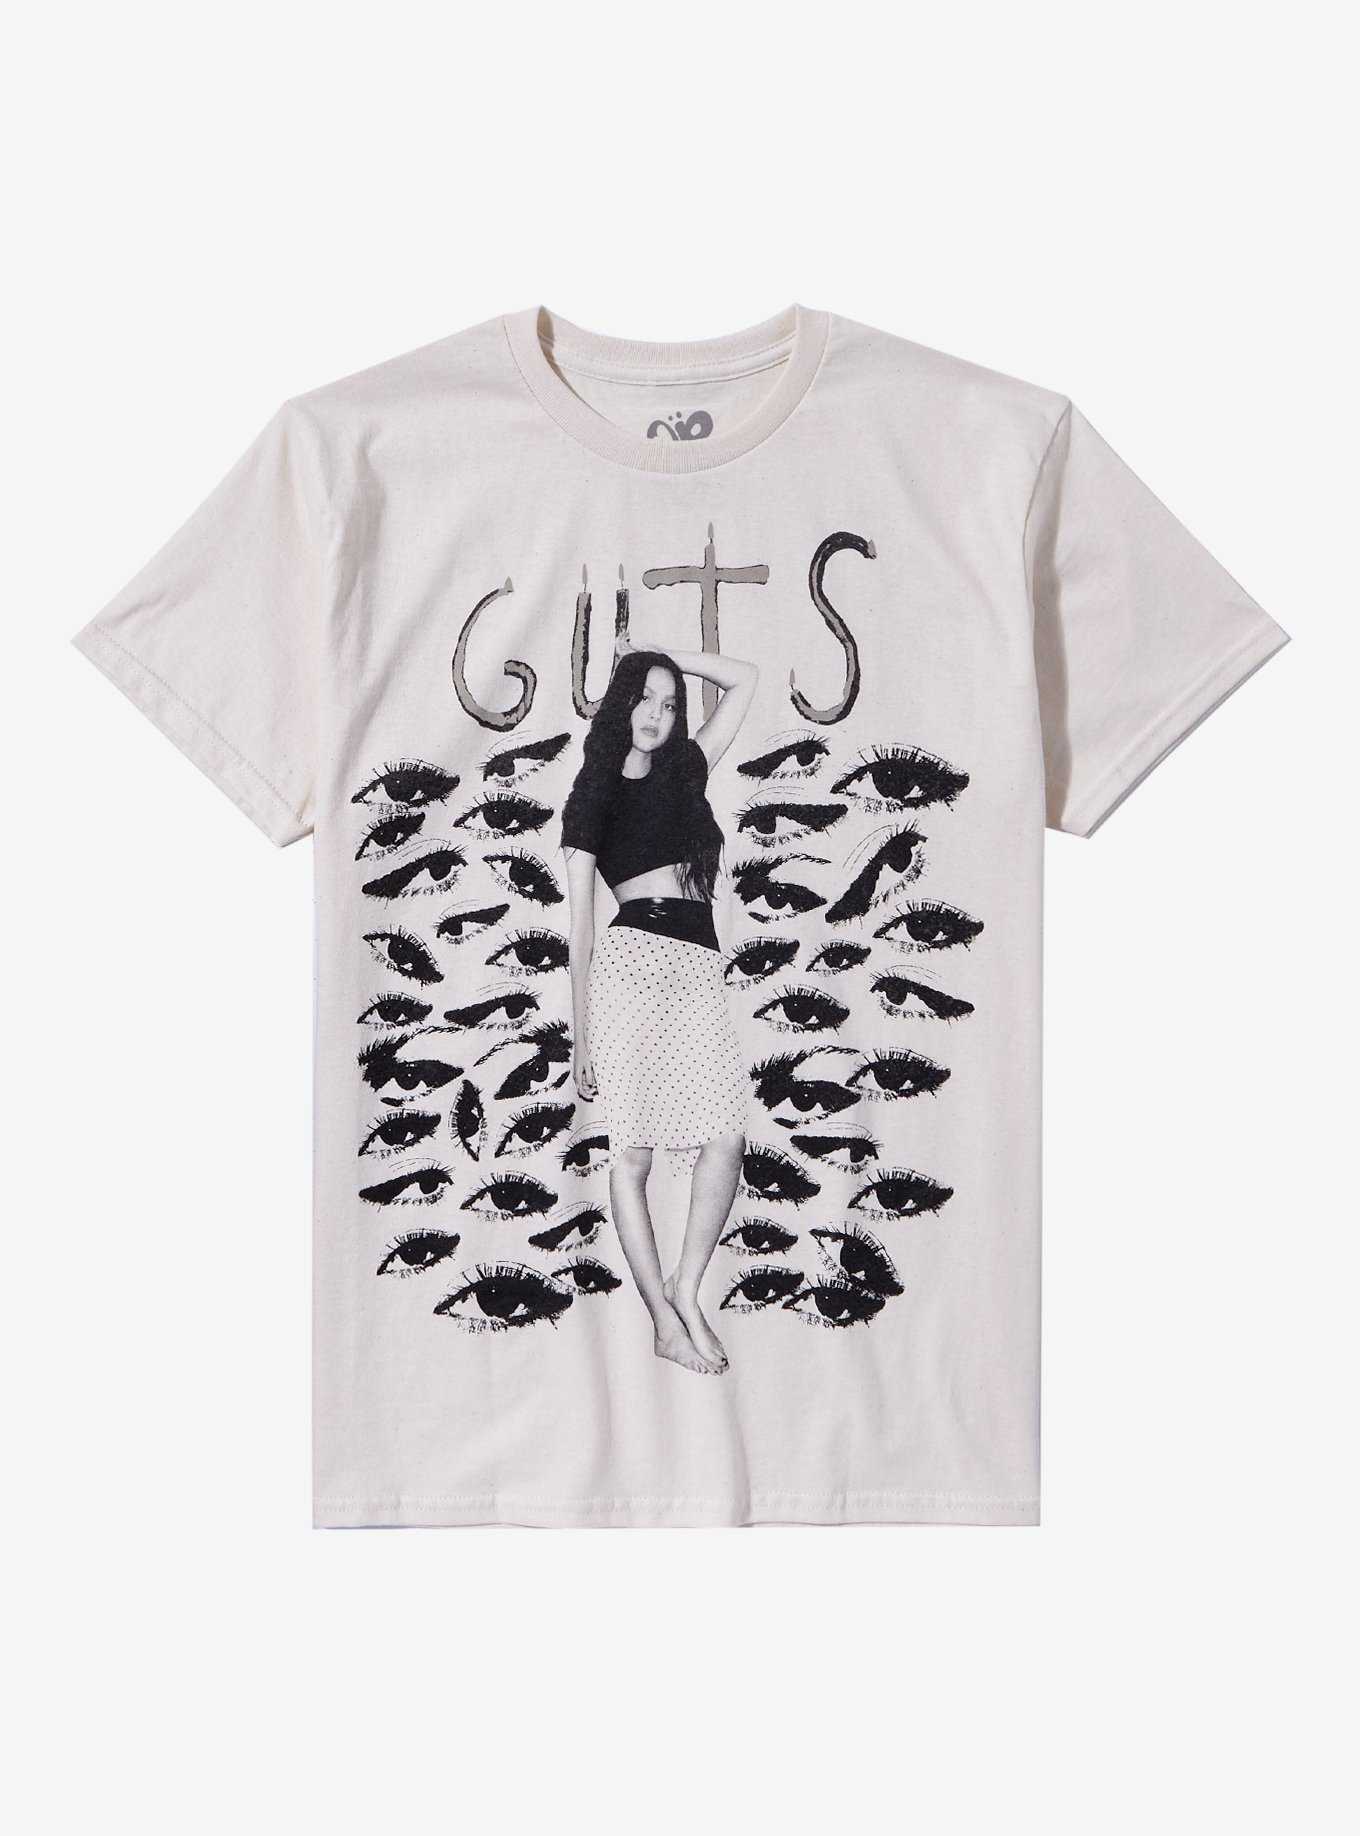 Olivia Rodrigo Guts Eyes Boyfriend Fit Girls T-Shirt, , hi-res